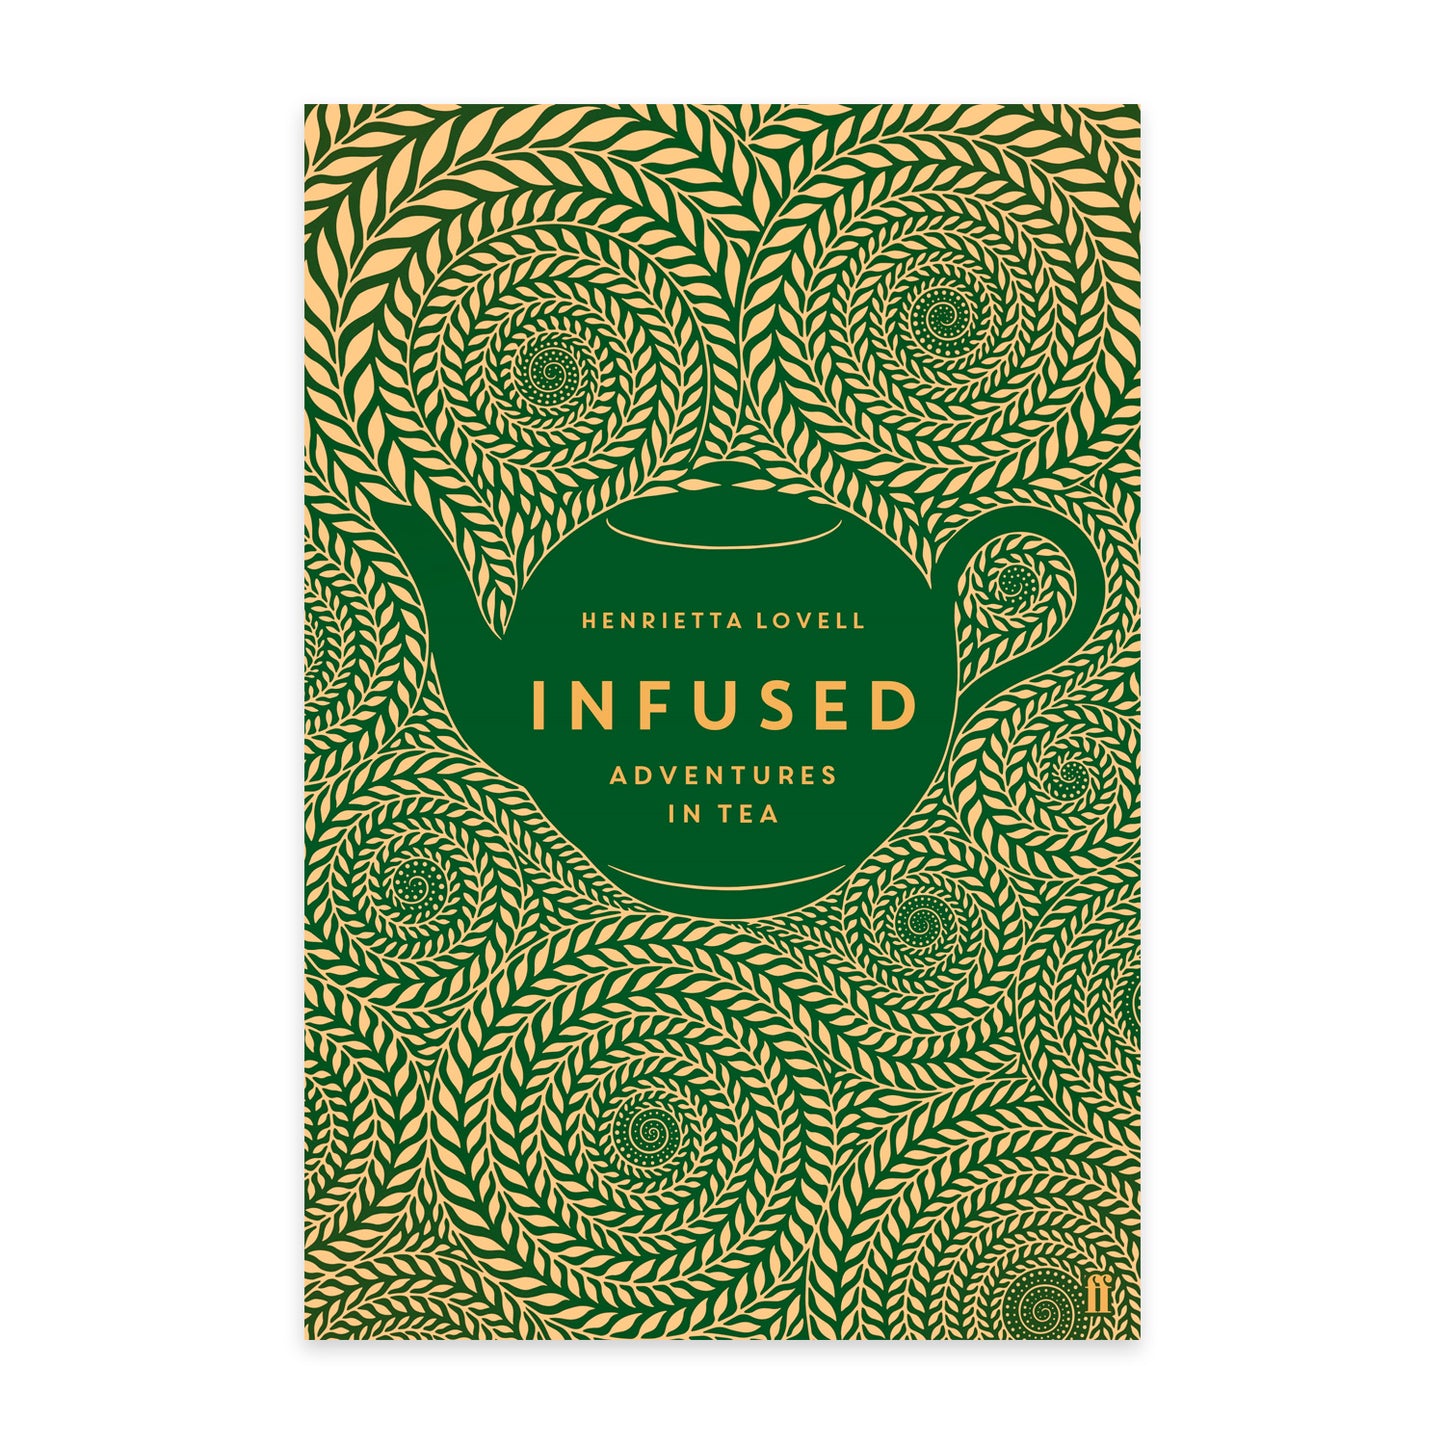 Infused - Adventures in Tea